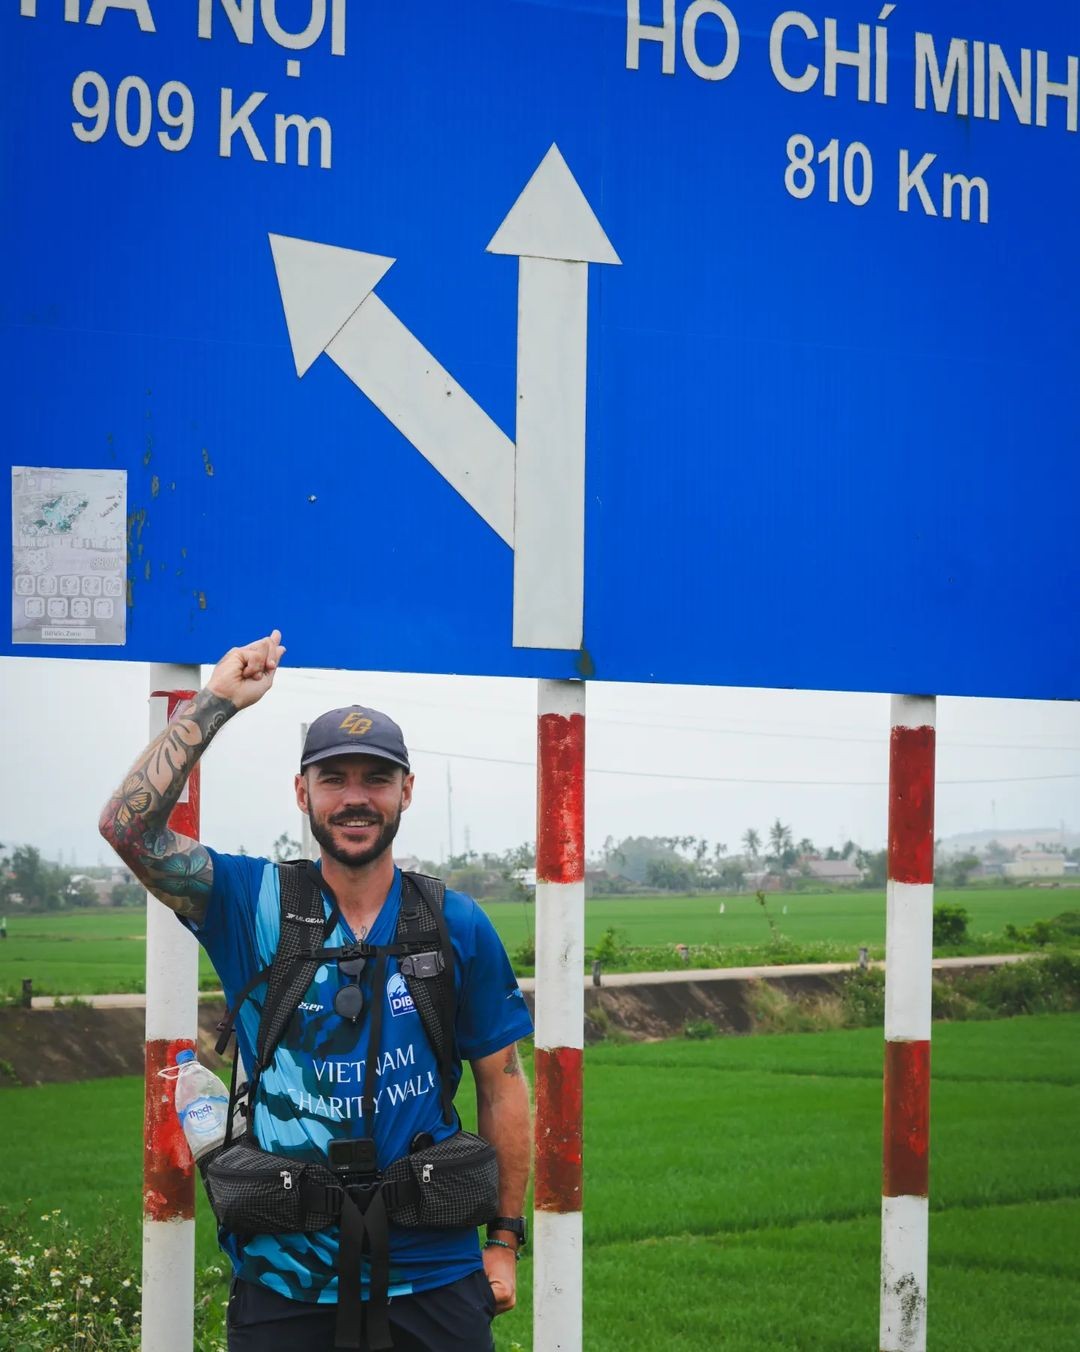 Expat Spotlight: Jake Norris & Sean Down - Walking Across Vietnam to Help Children